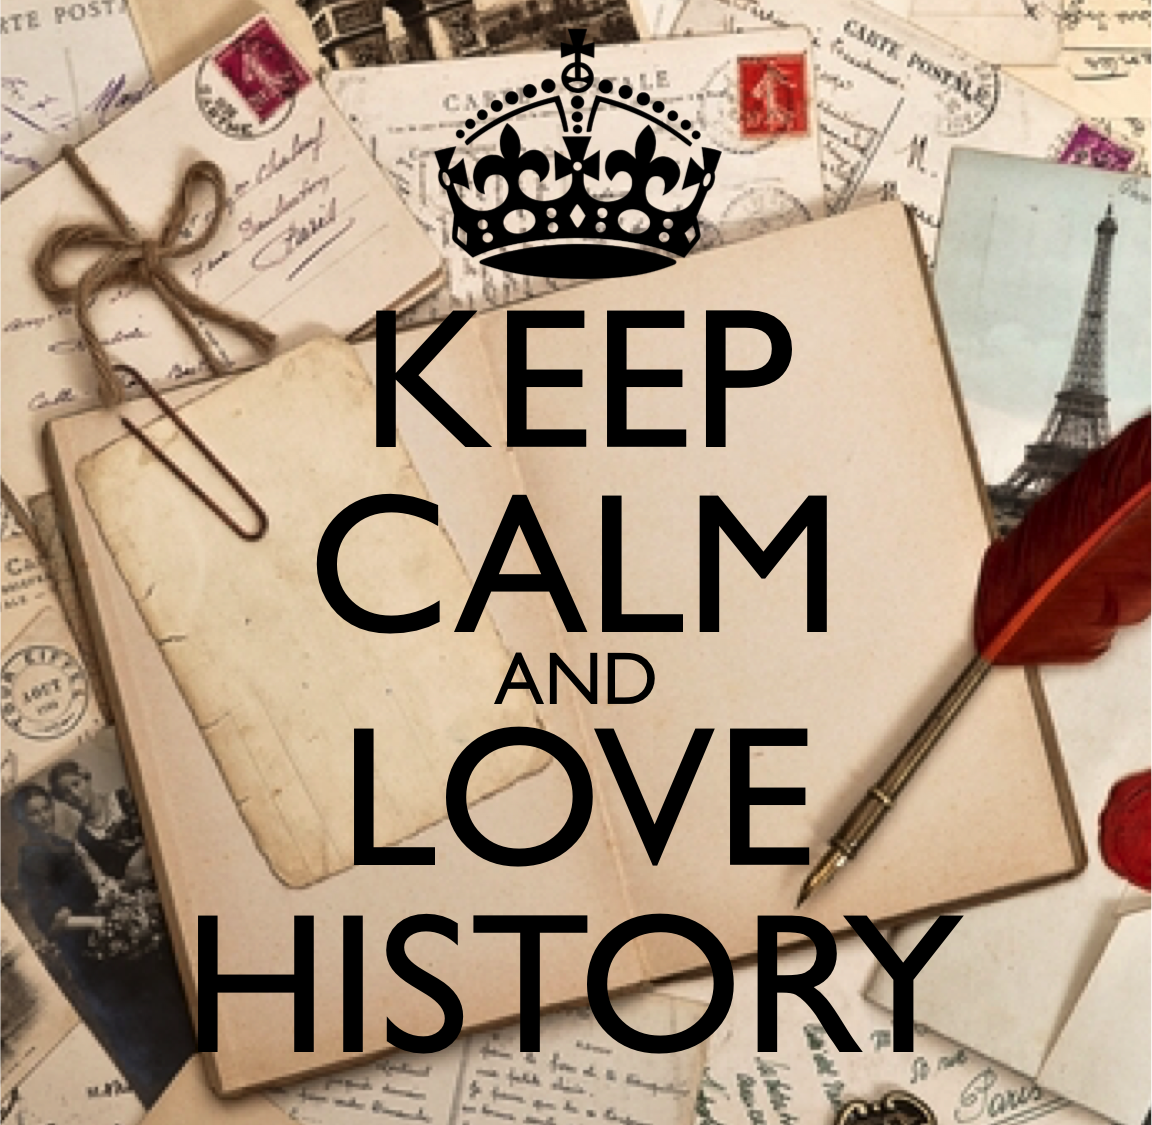 Read love stories. I Love история. The History of Love. History one Love. Learn History.